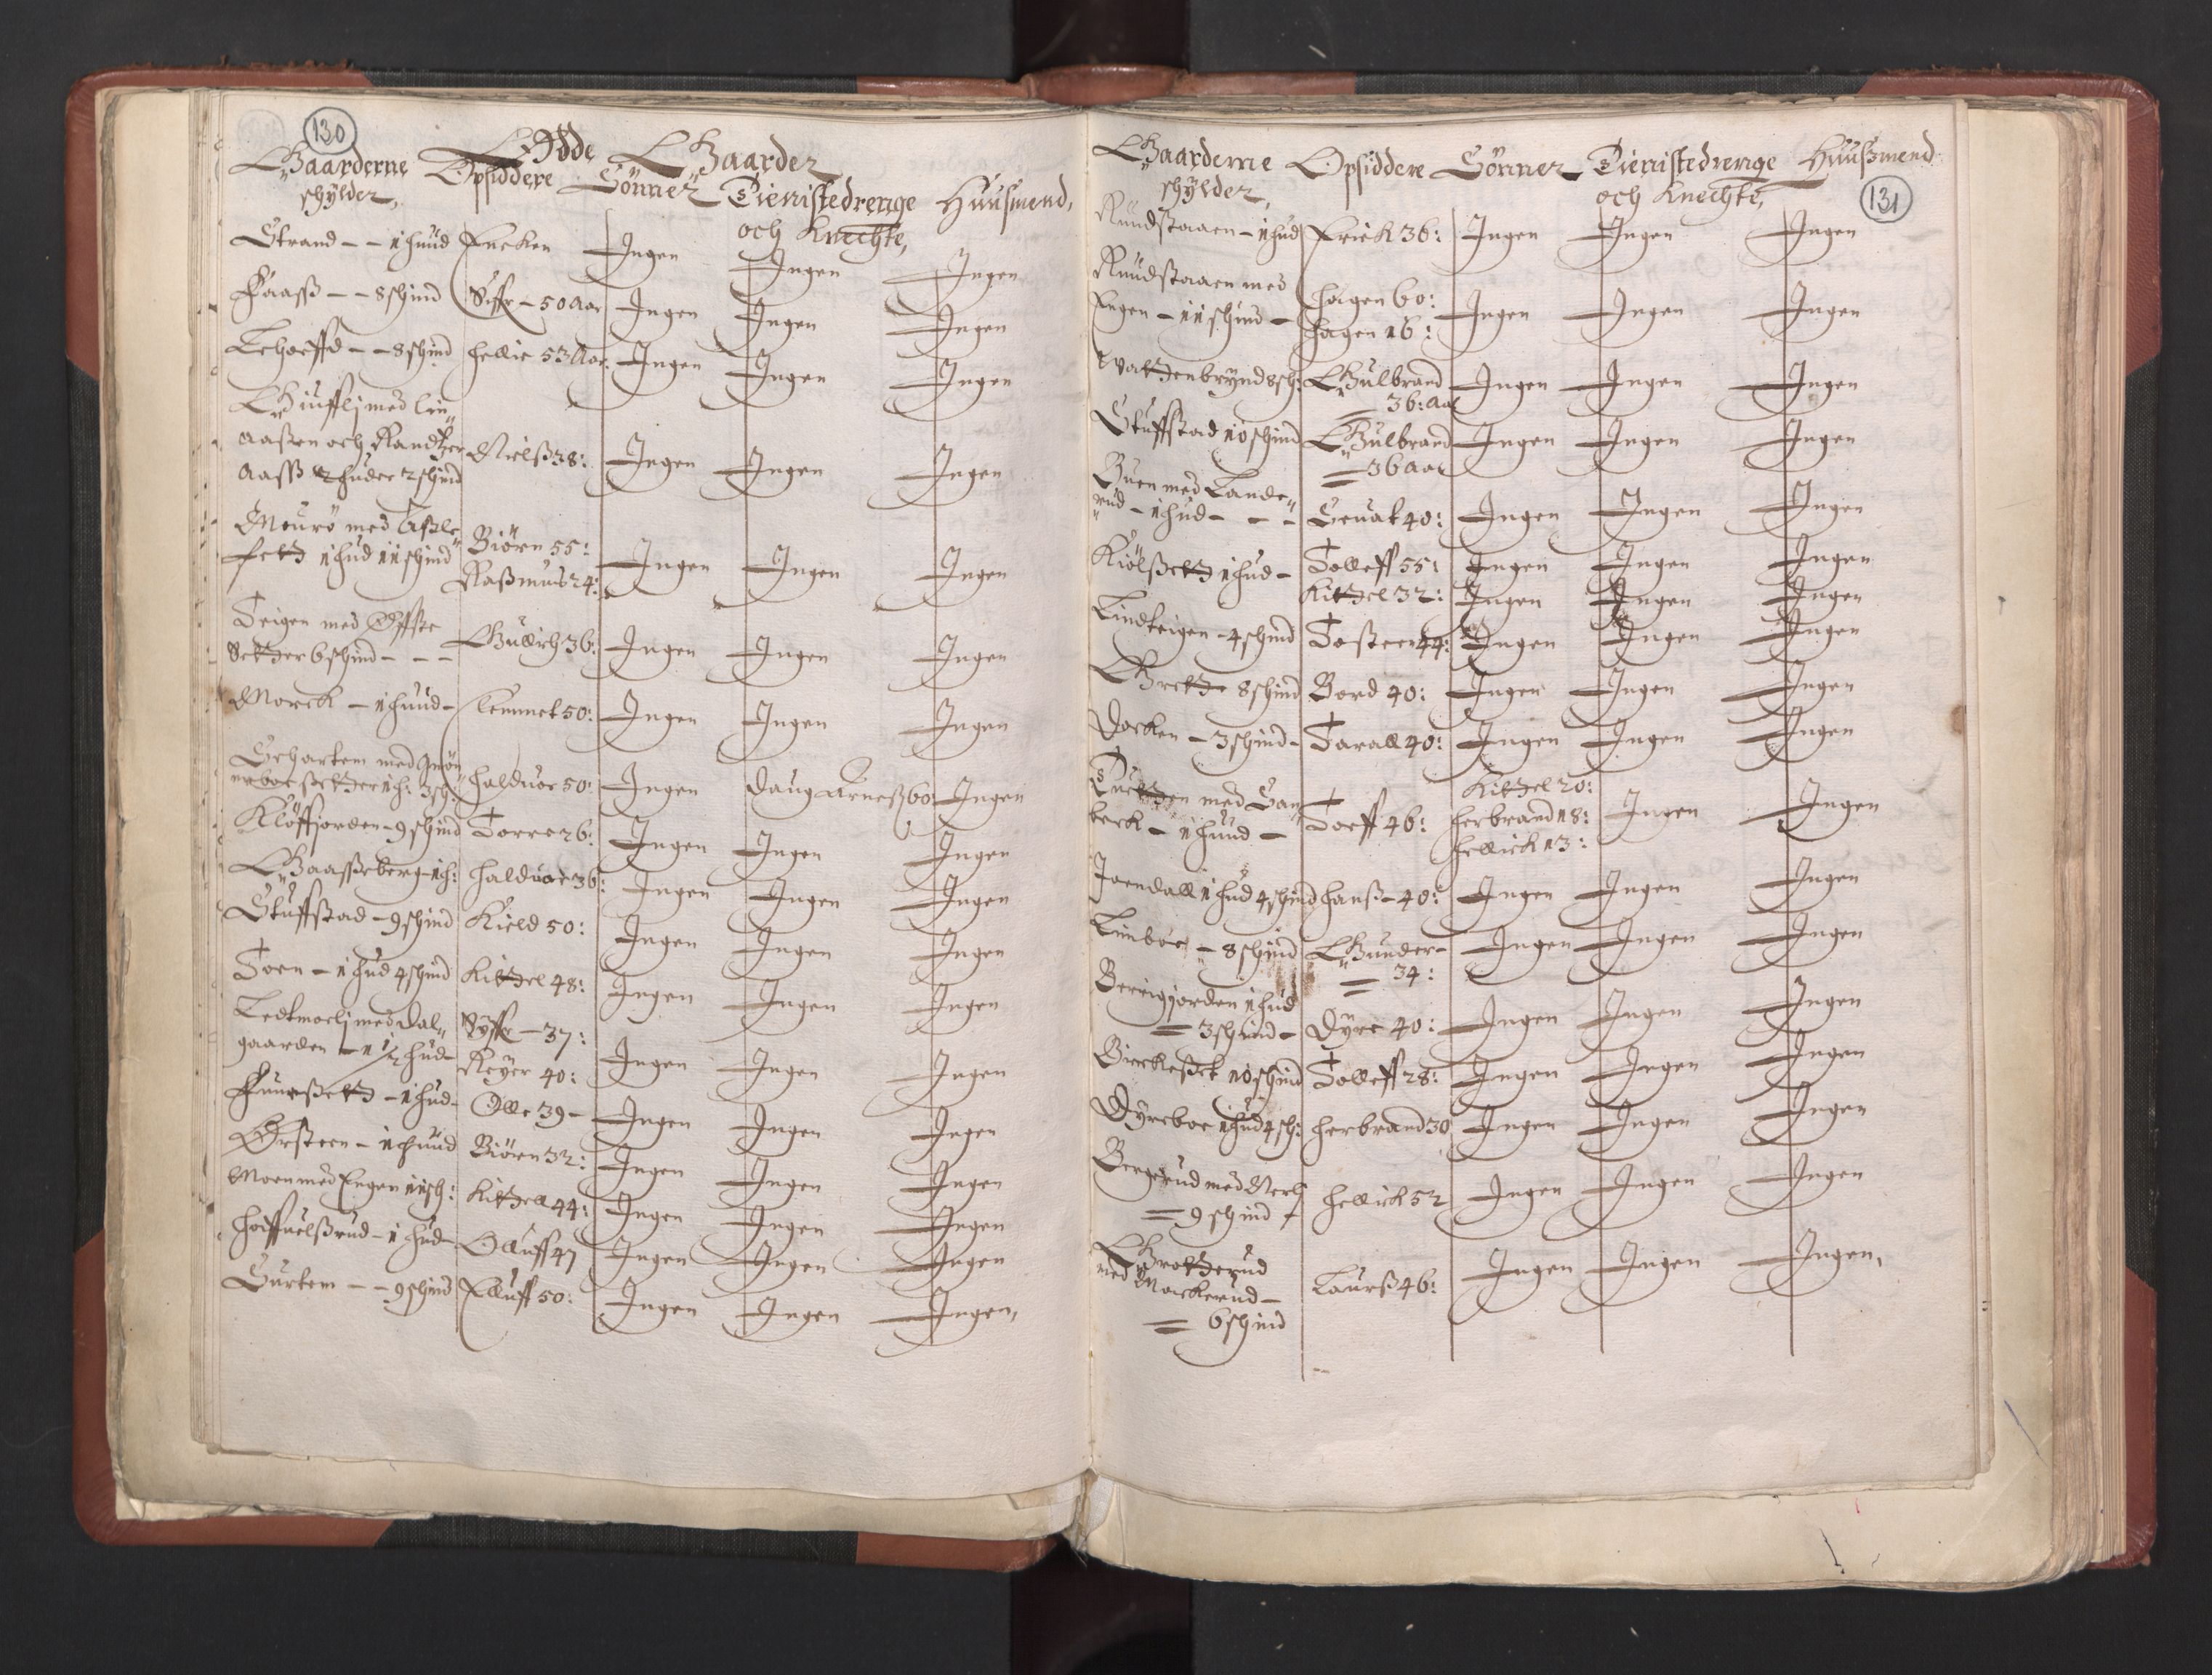 RA, Fogdenes og sorenskrivernes manntall 1664-1666, nr. 5: Fogderier (len og skipreider) i nåværende Buskerud fylke og Vestfold fylke, 1664, s. 130-131